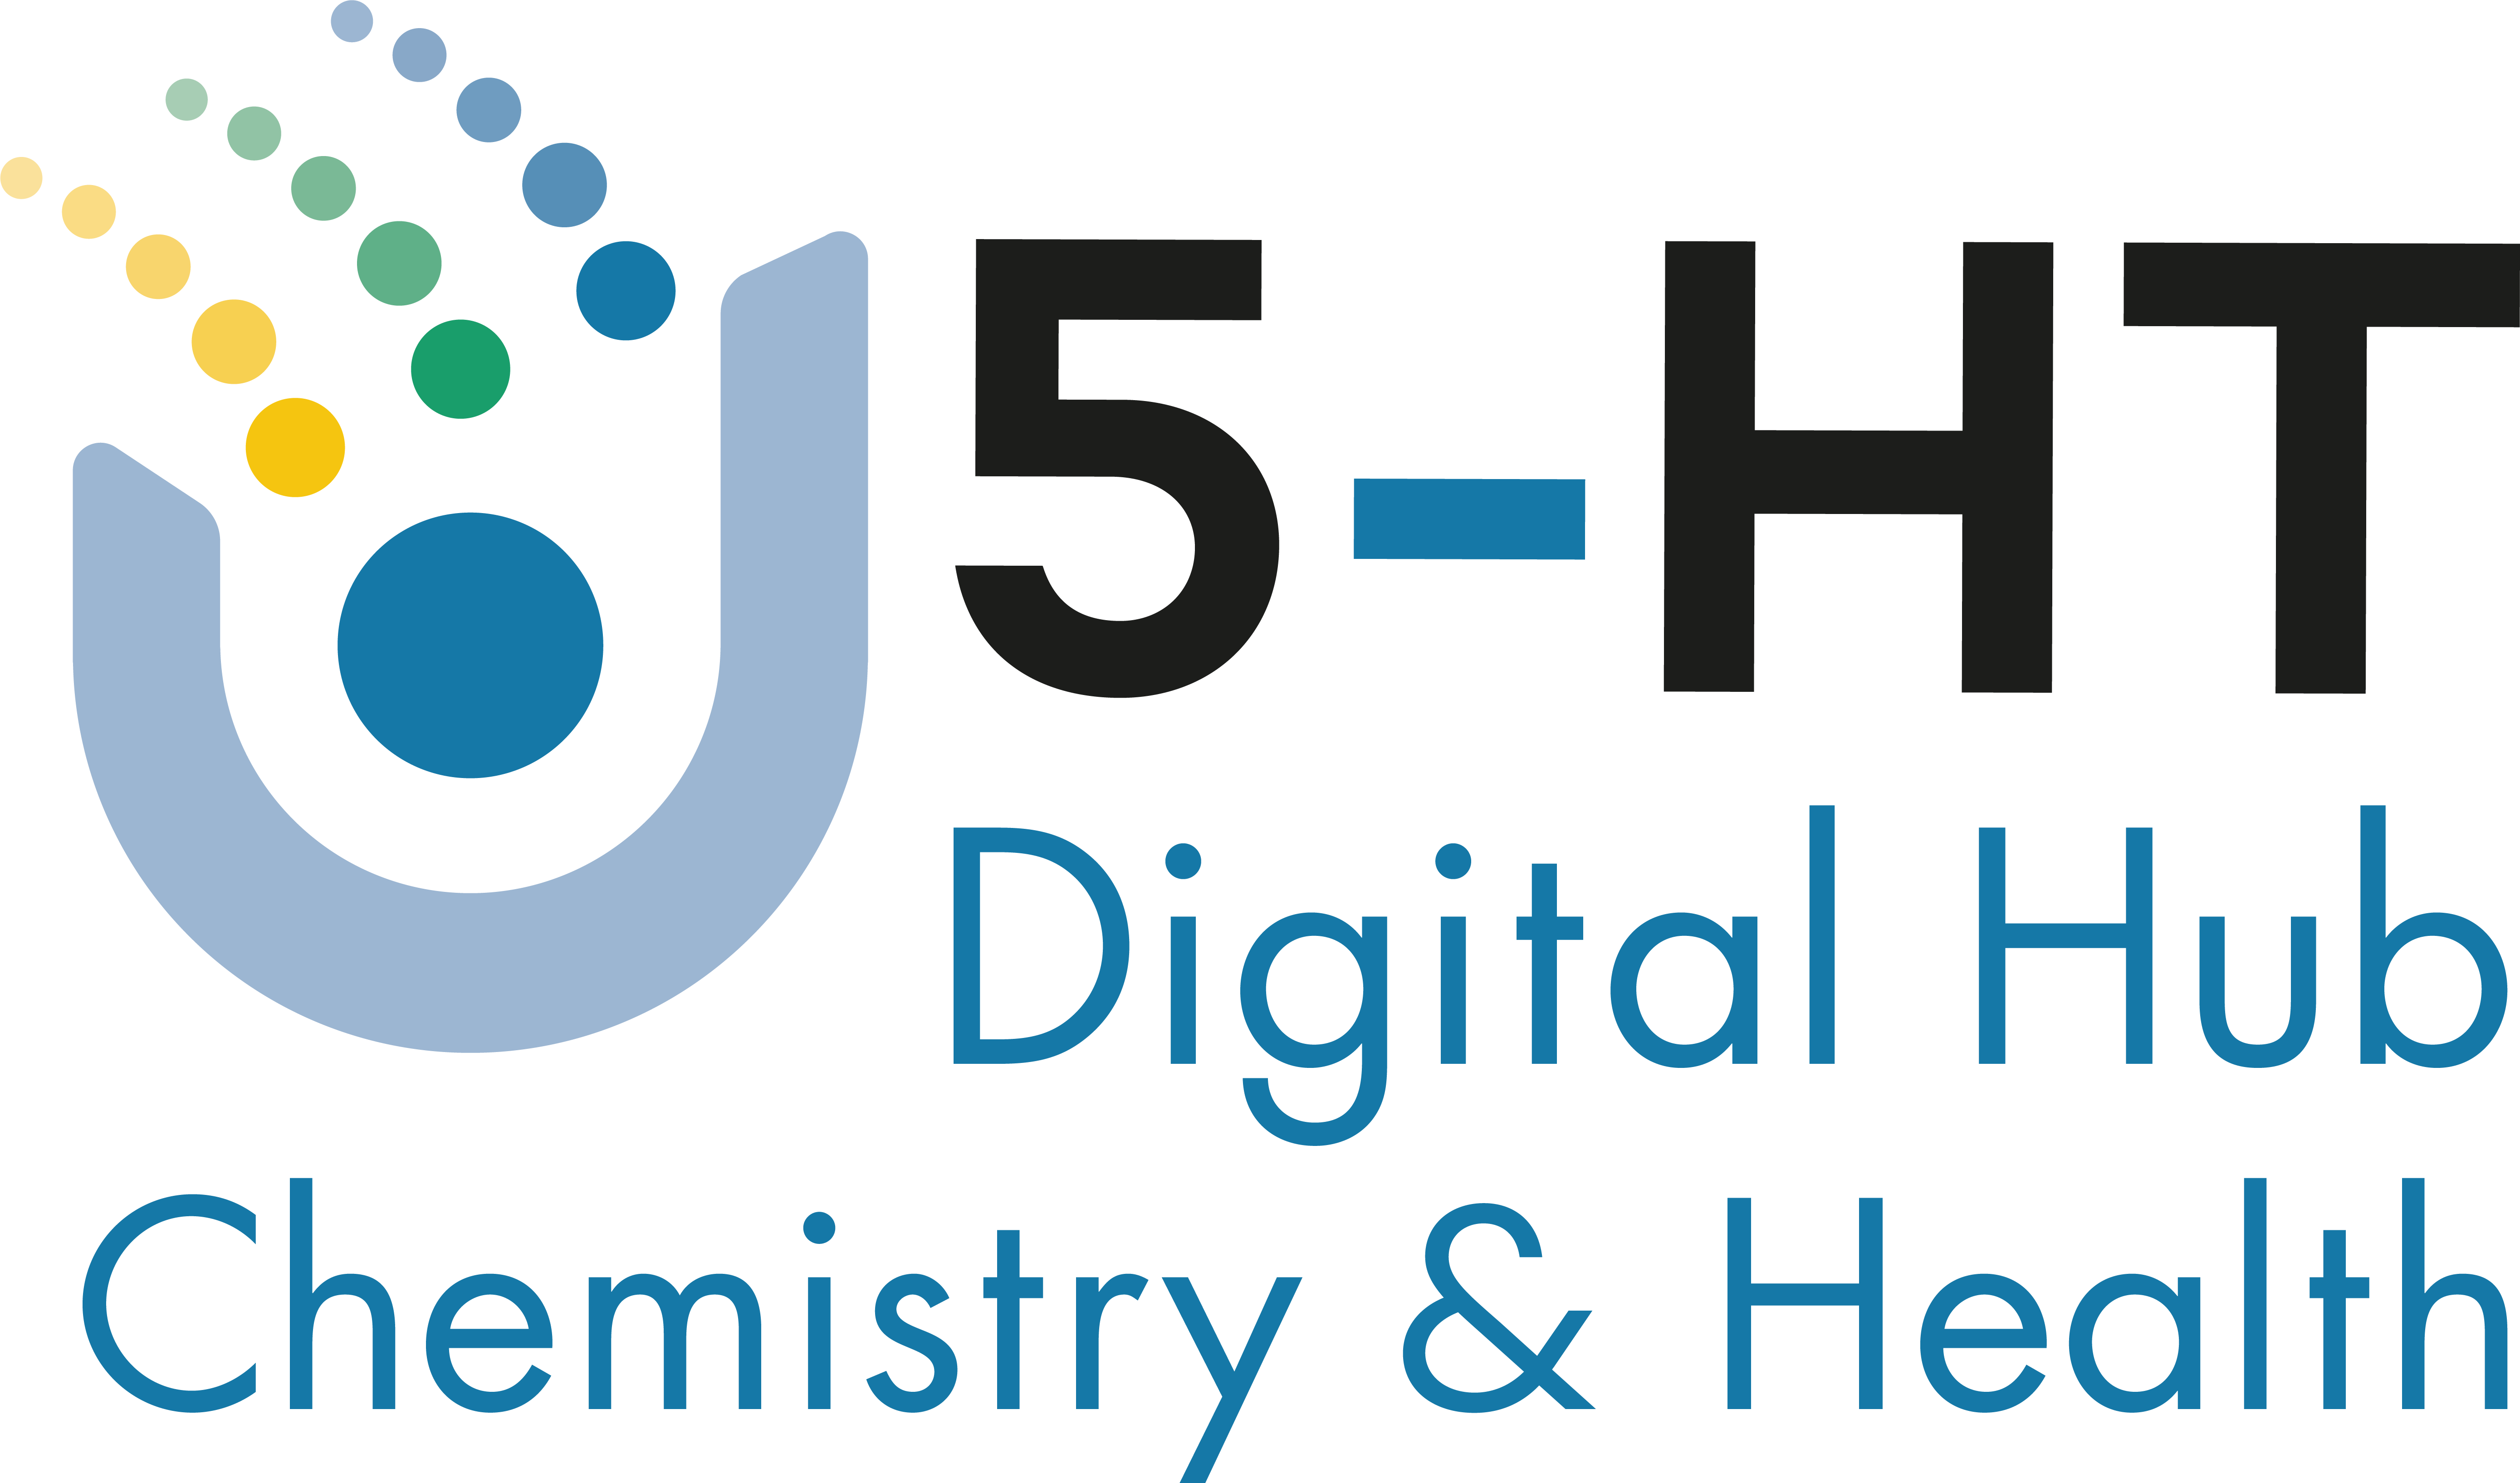 Wir sind Teil des 5-HT Digital Hub!